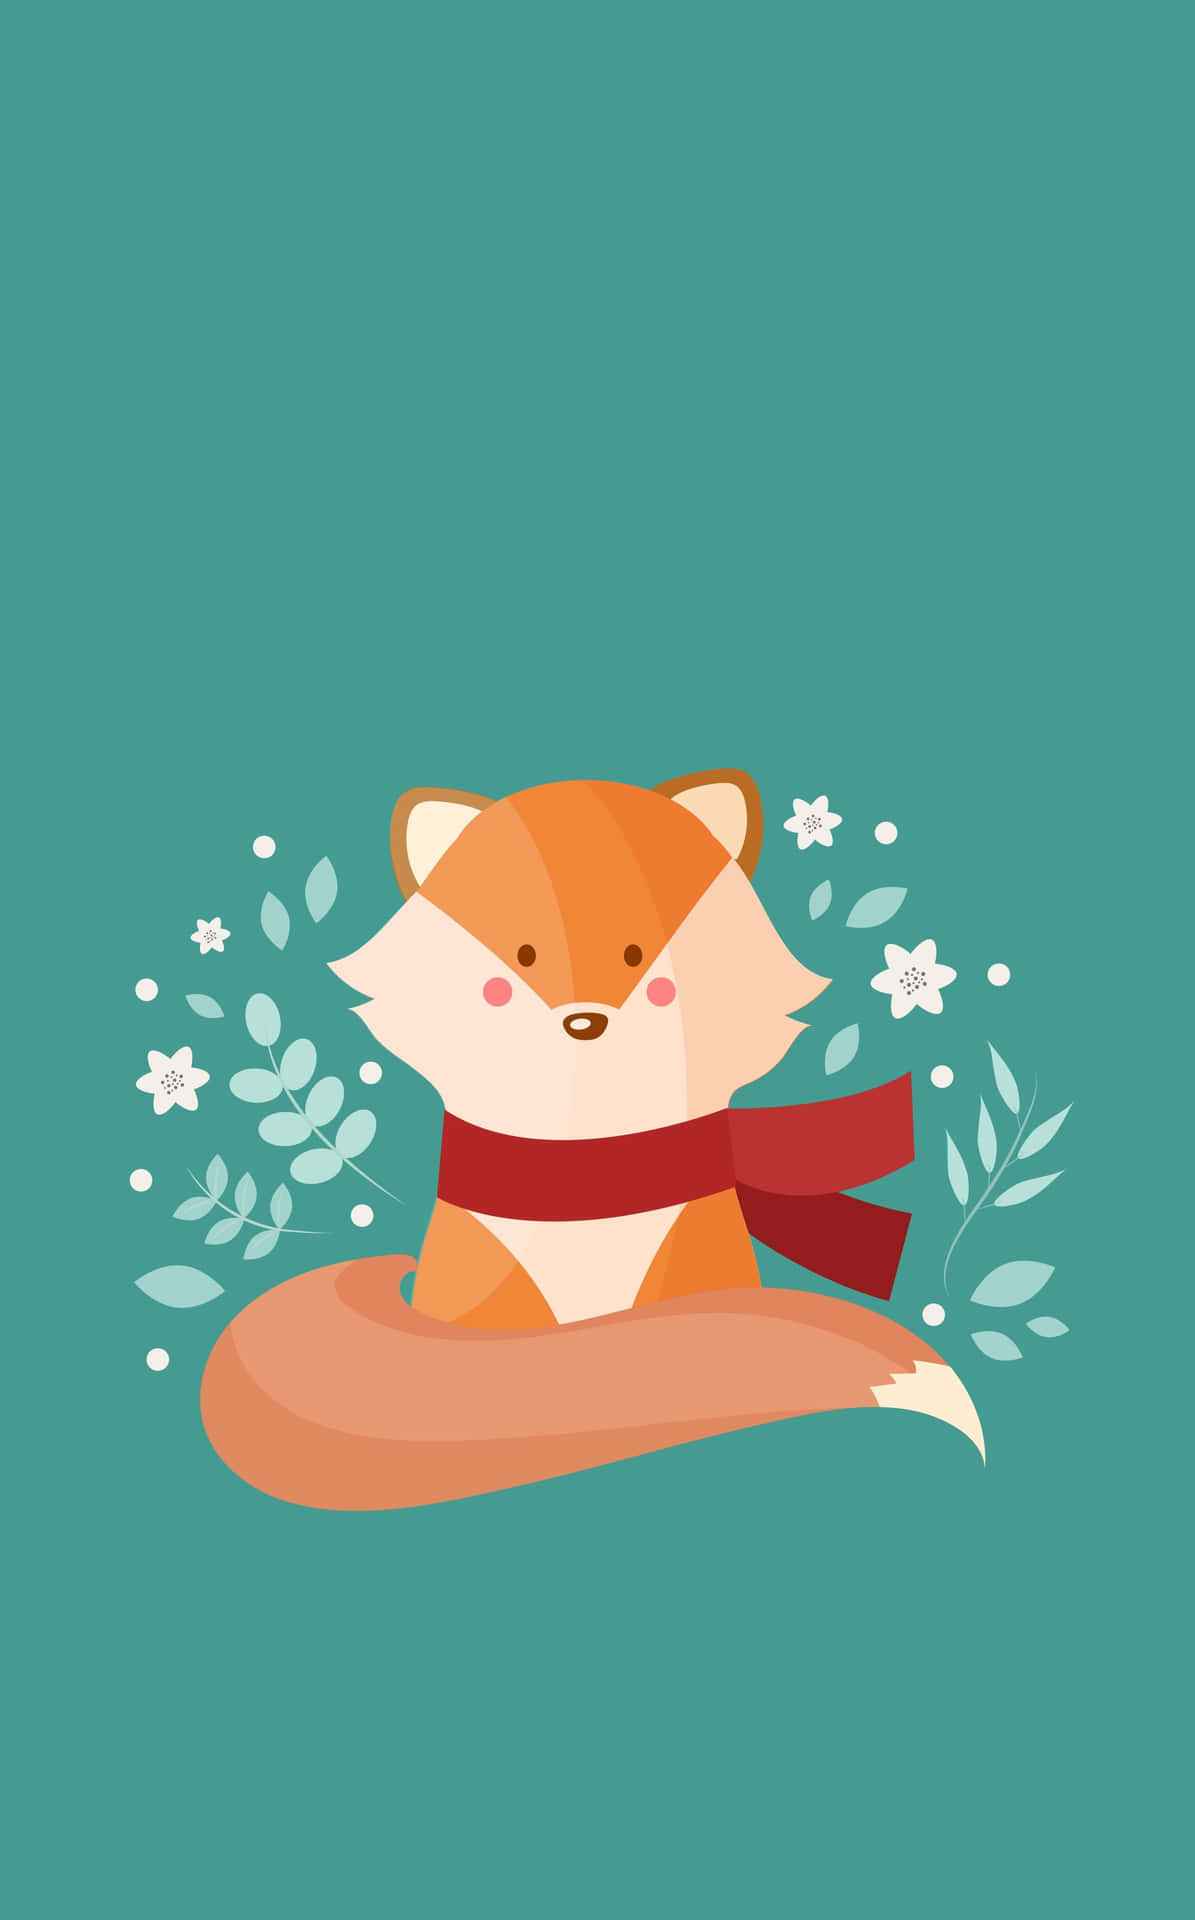 Kawaii Fox: A Cute and Adorable Sketch of a Smiling Fox Wallpaper